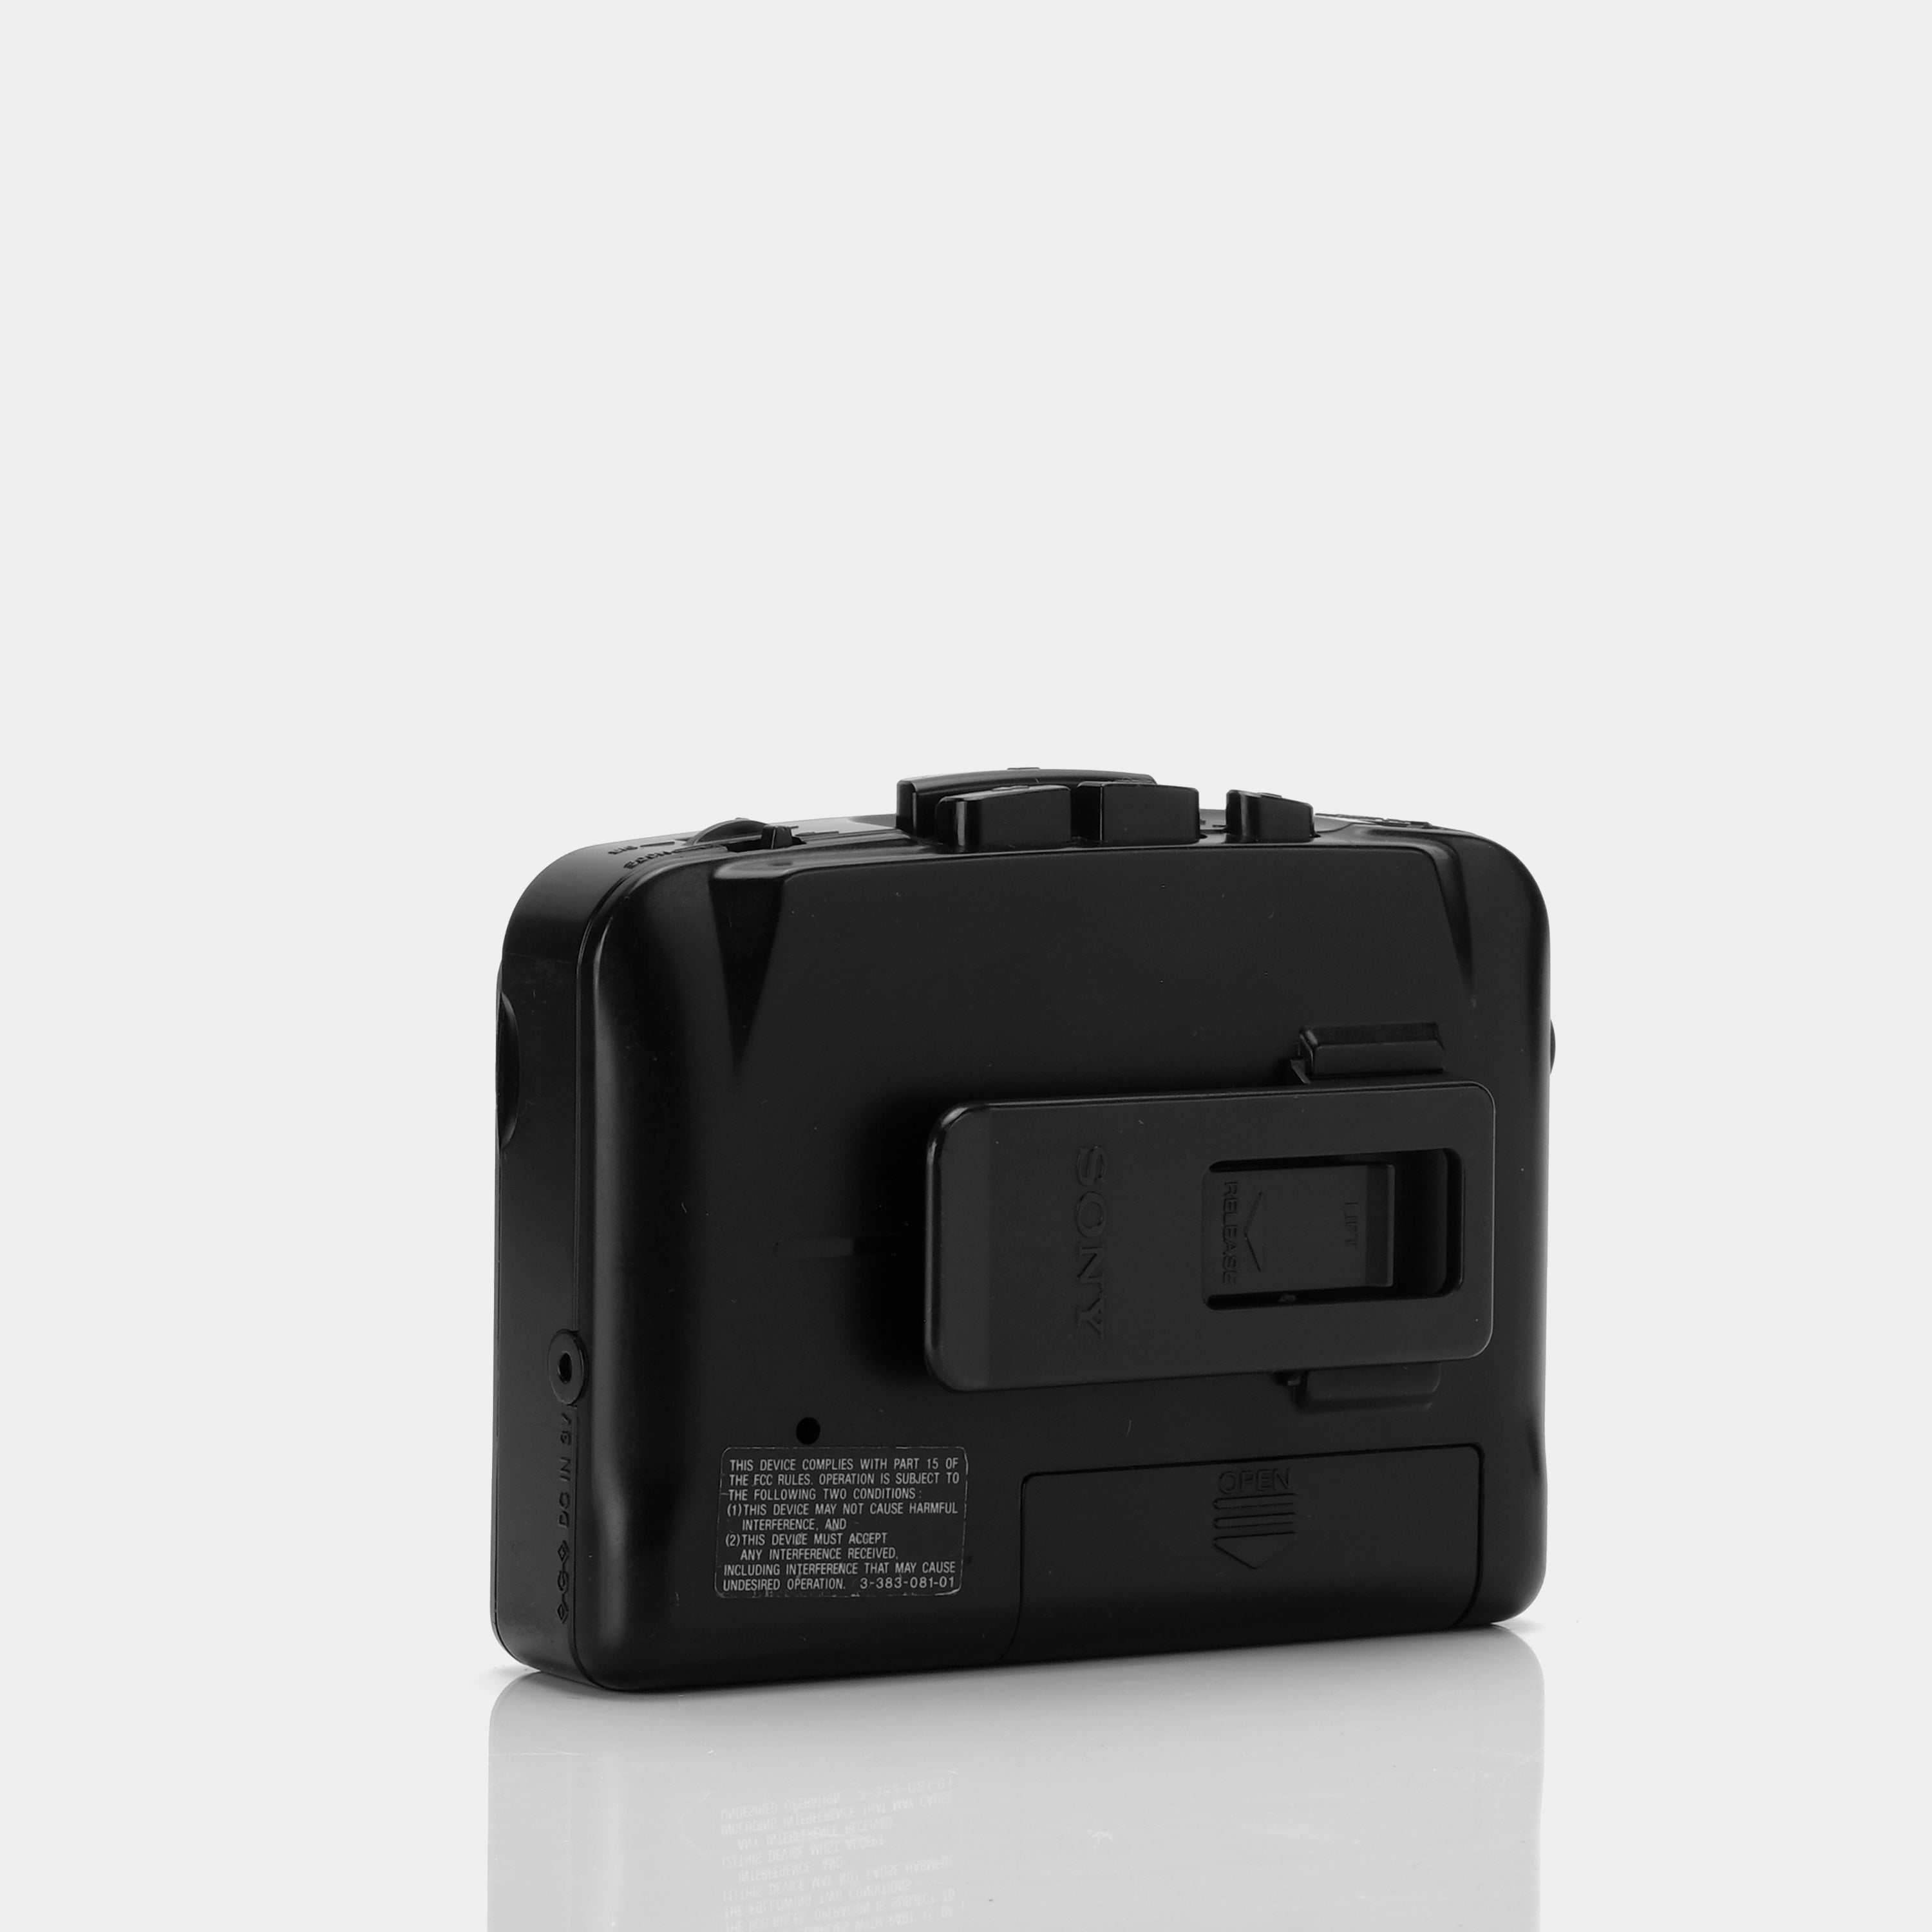 Sony Walkman WM-FX415 AM/FM Portable Cassette Player (B-Grade)